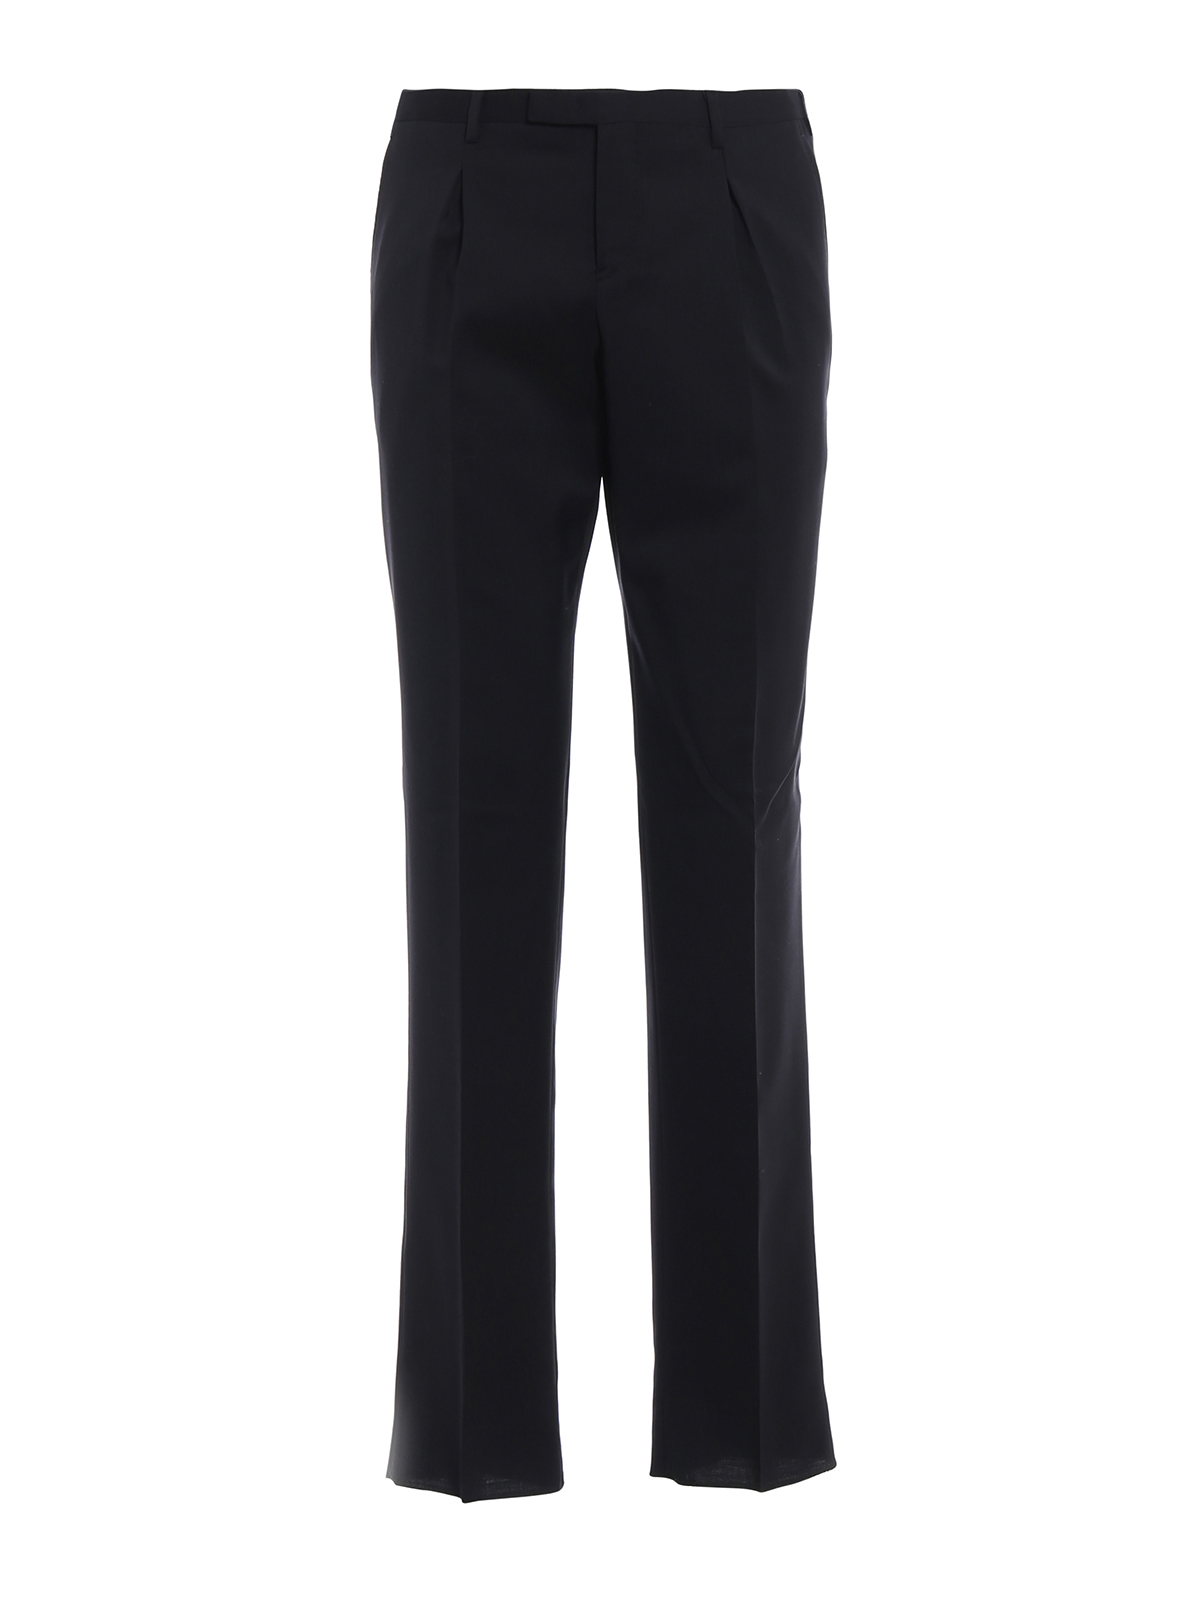 Giorgio Armani Men's Suits & Pants Clothing at Neiman Marcus